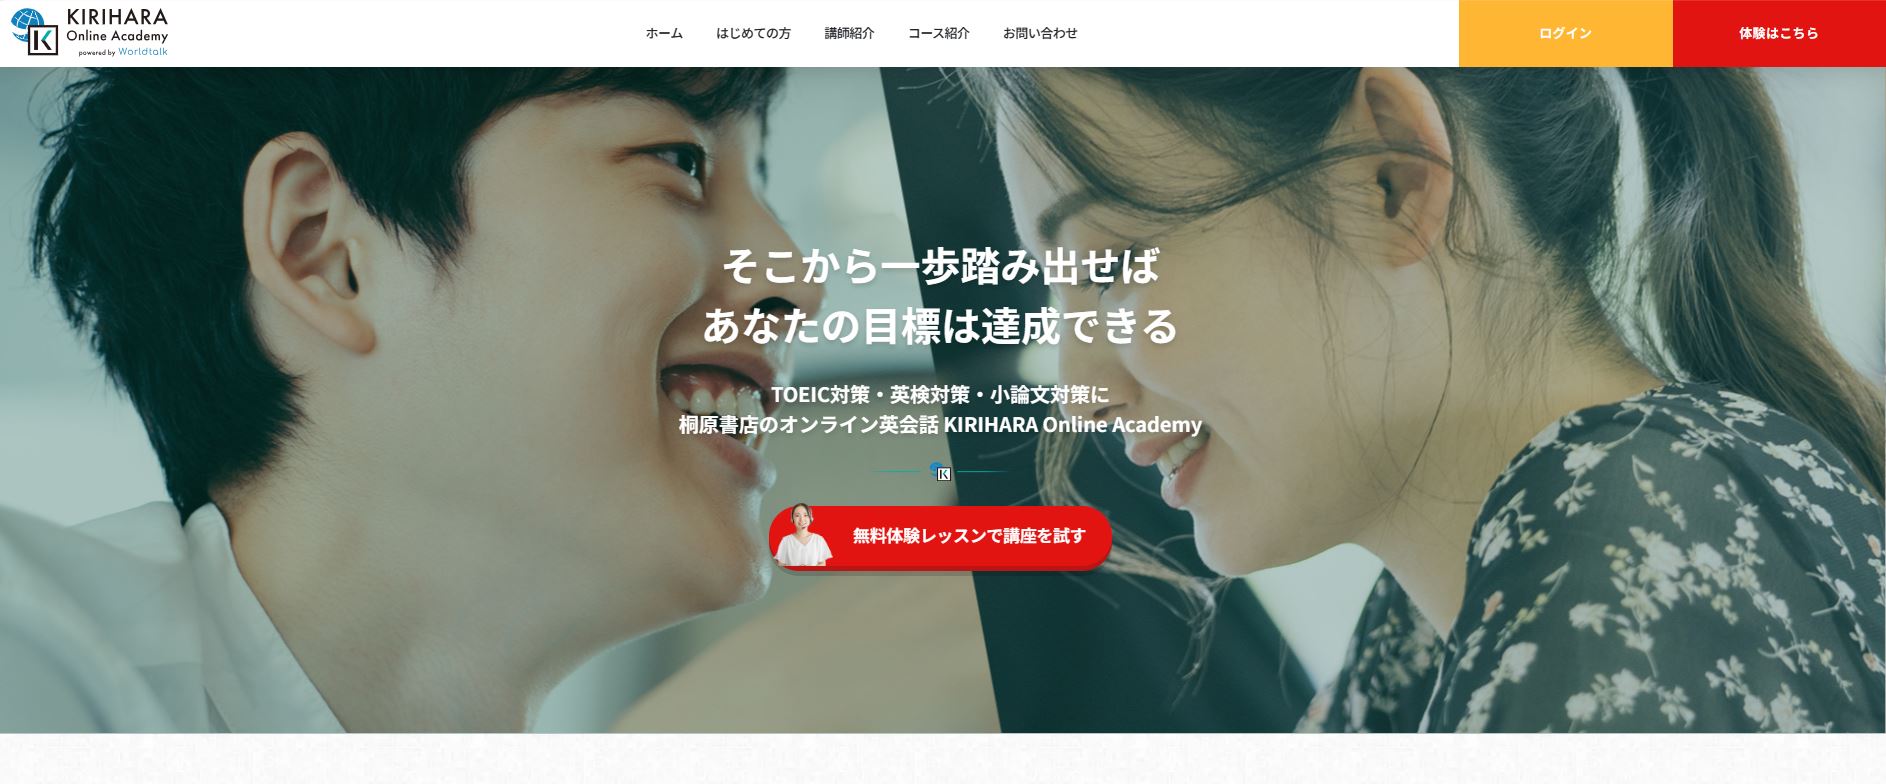 KIRIHARA Online Academy（桐原オンラインアカデミー）のウェブサイト画像